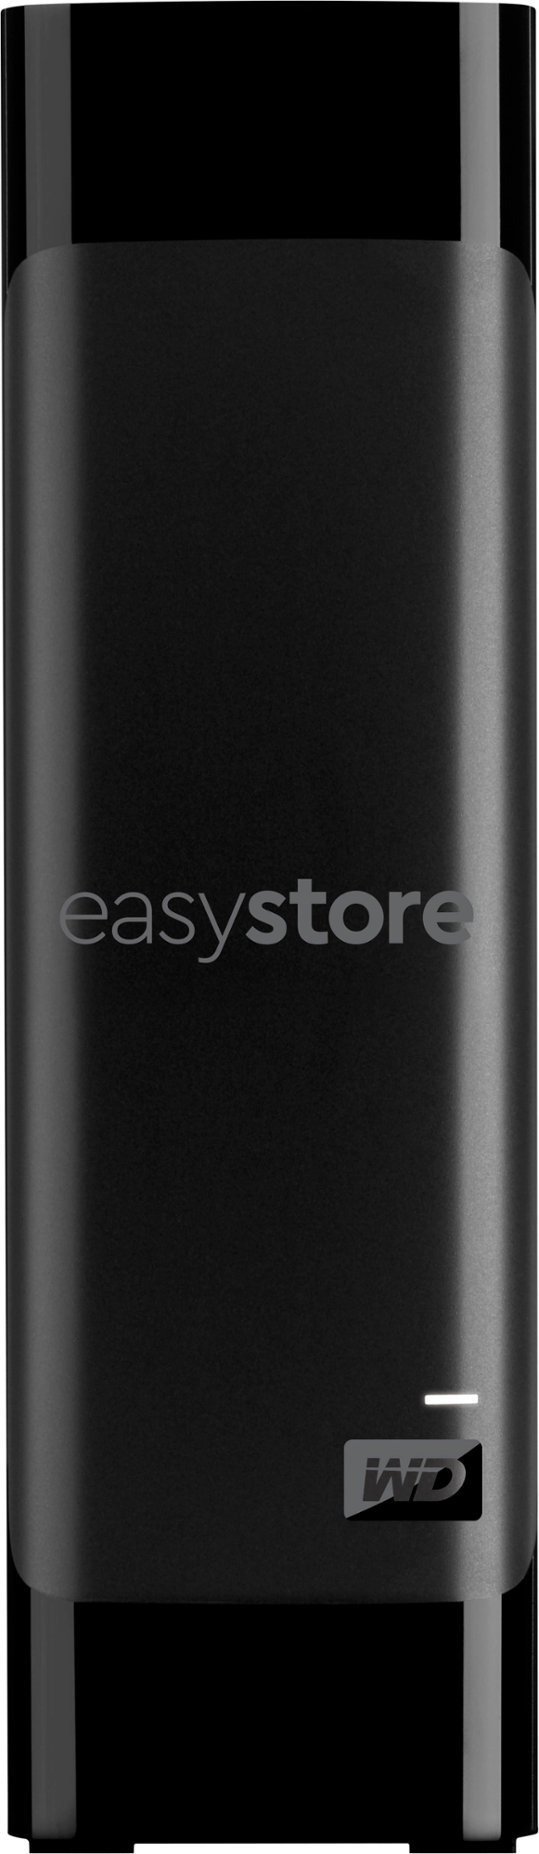 WD easystore 18TB External USB 3.0 外置硬盘